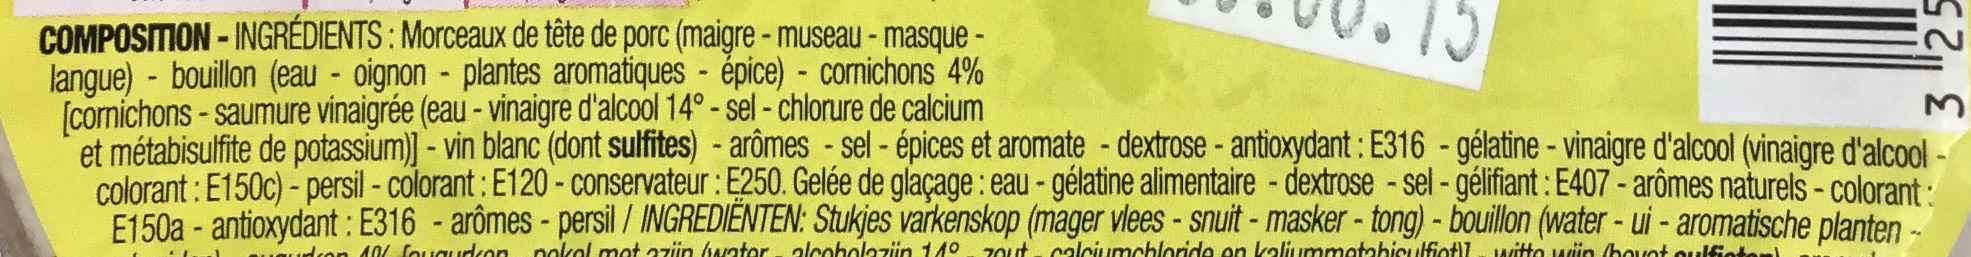 Fromage de tête - Ingredients - fr